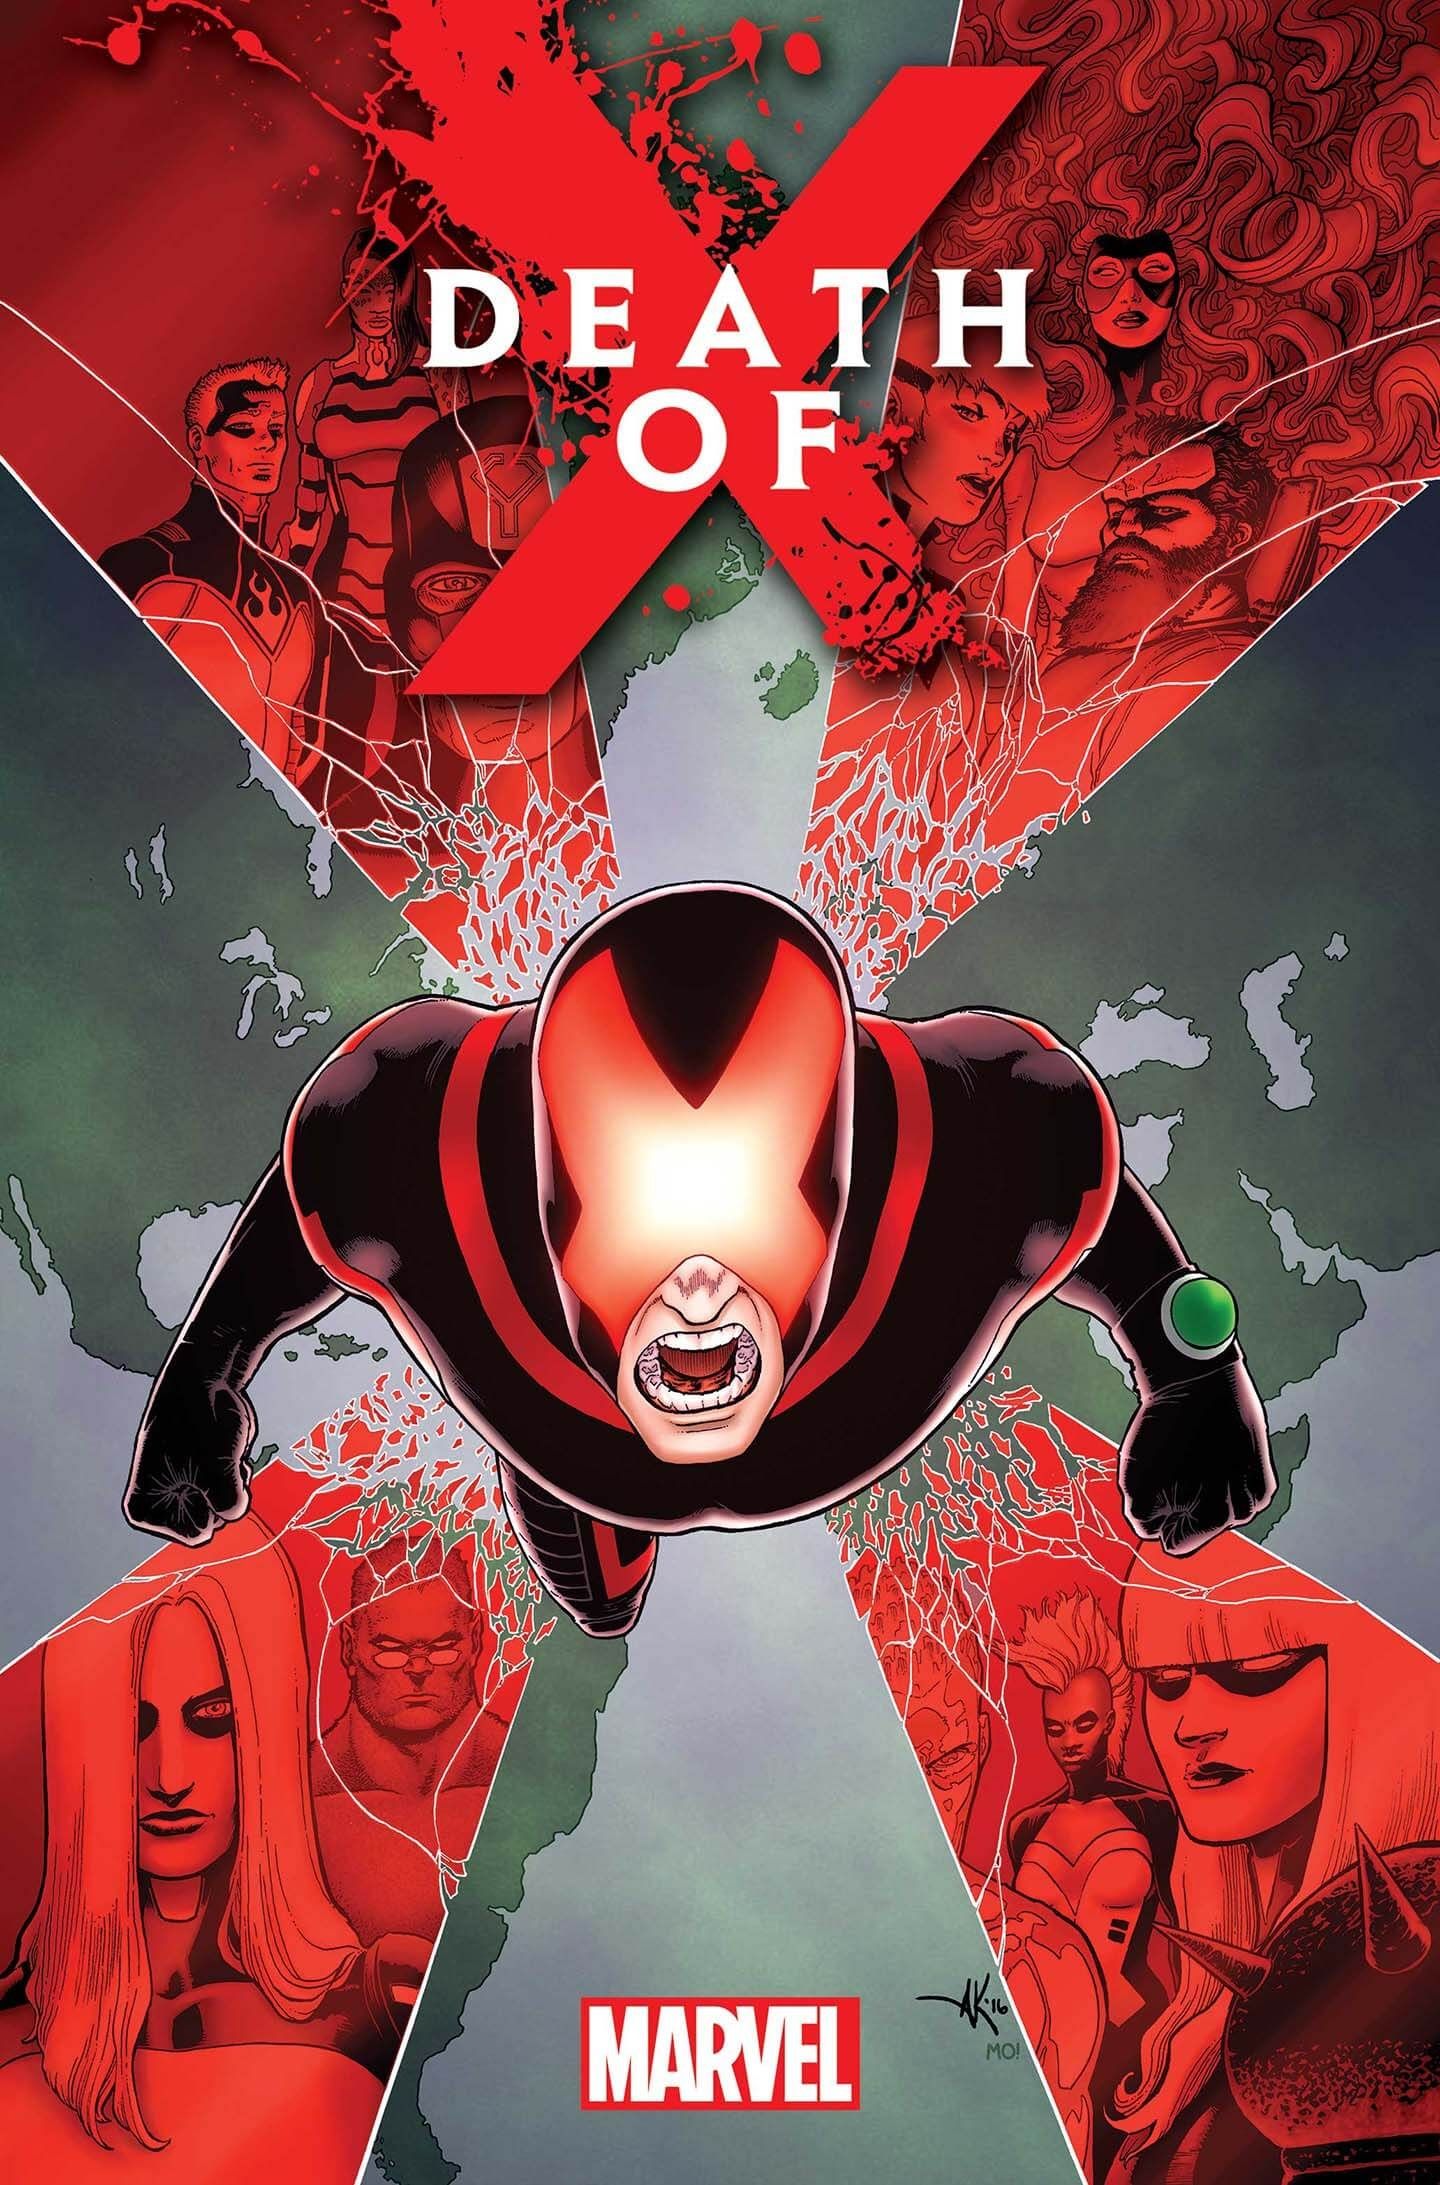 Death of X-men Comic Book